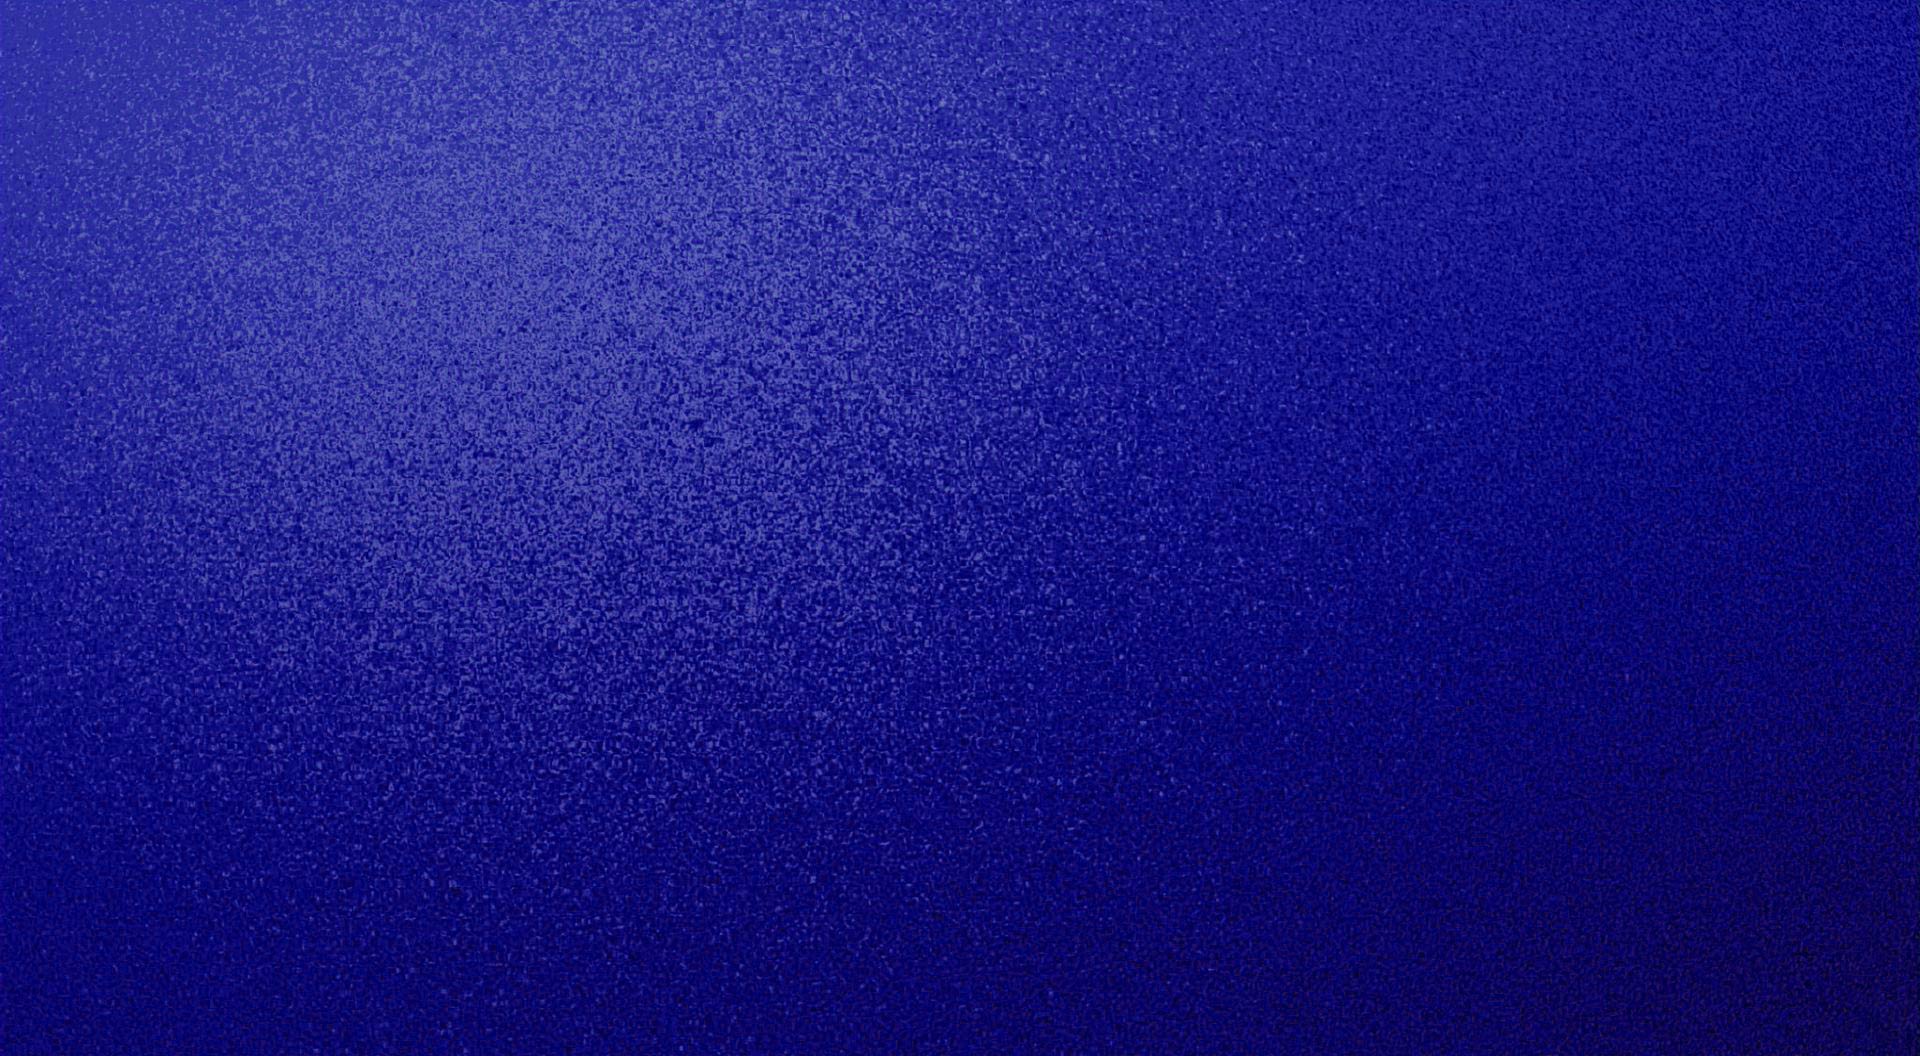 PERFECT DECOR Modern Damask Design Emboss Finish Wallpaper Vinyl 57 SQFT  Per Roll Light Blue and Gold  Amazonin Home Improvement